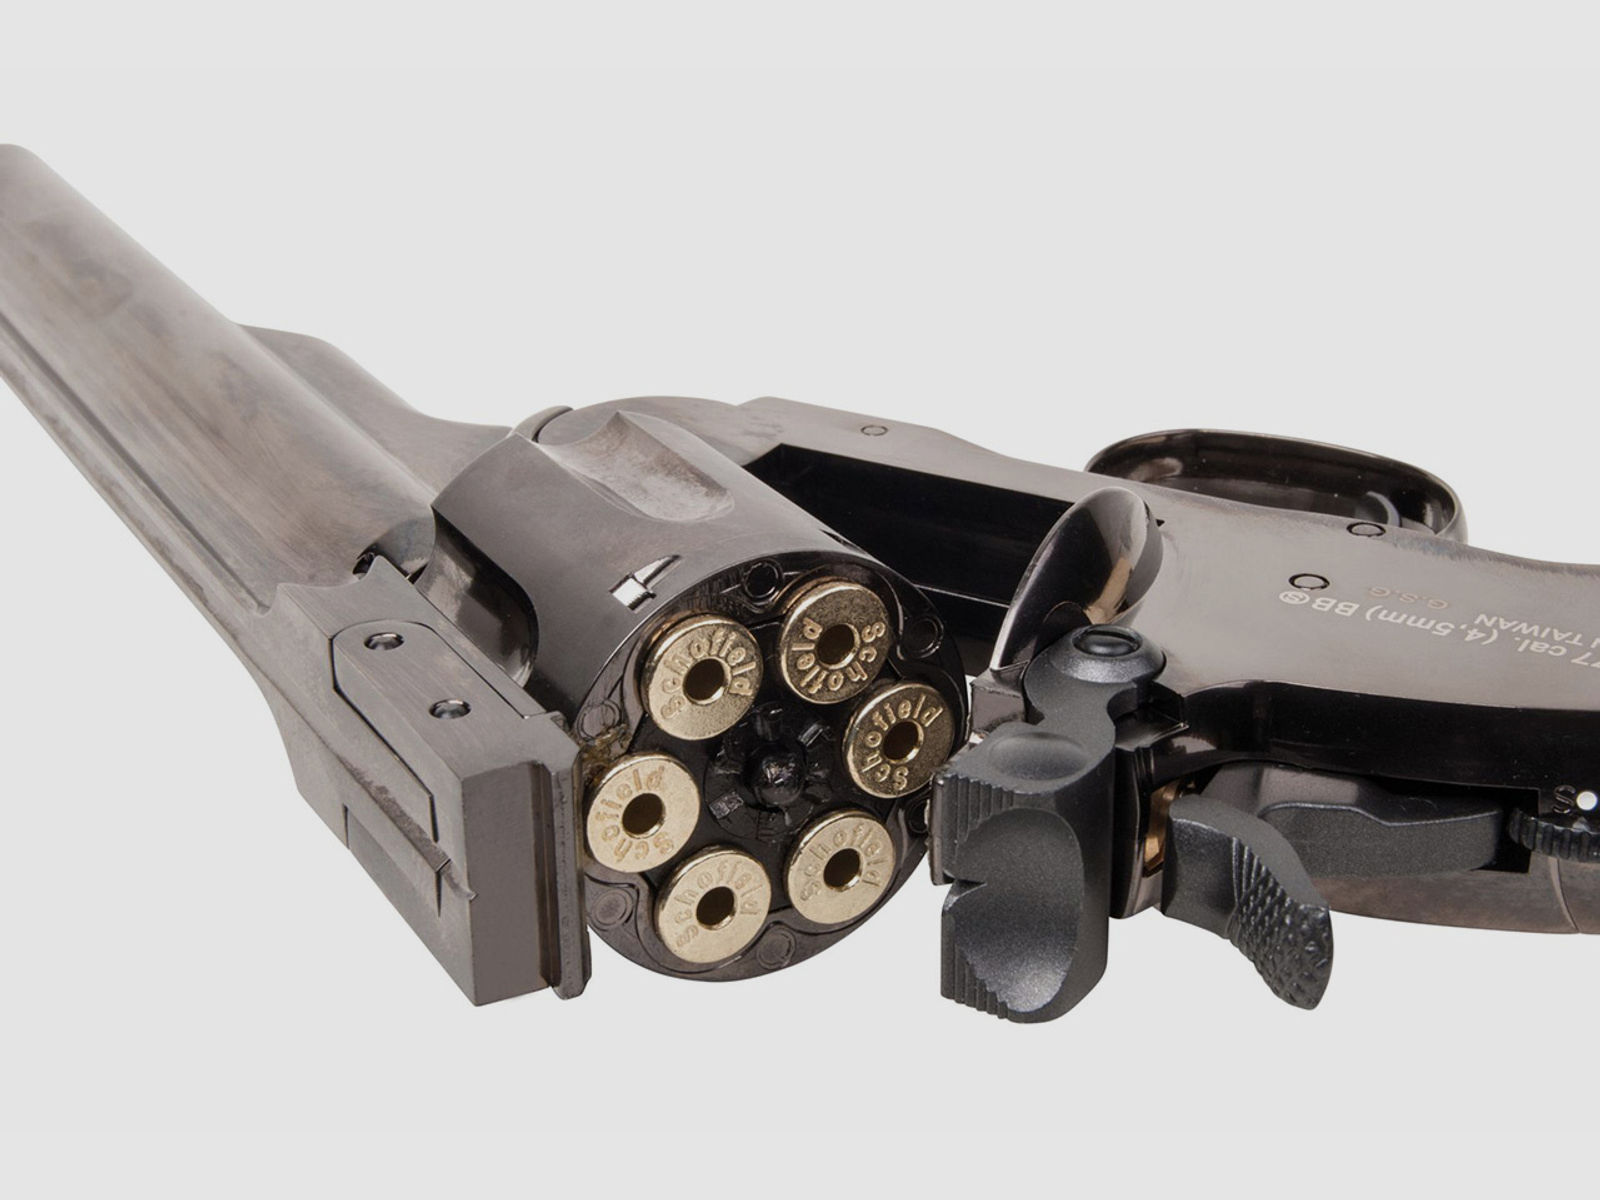 CO2 Revolver ASG Schofield 6 Zoll Steel Gray stahlgrau Kaliber 4,5 mm BB (P18)